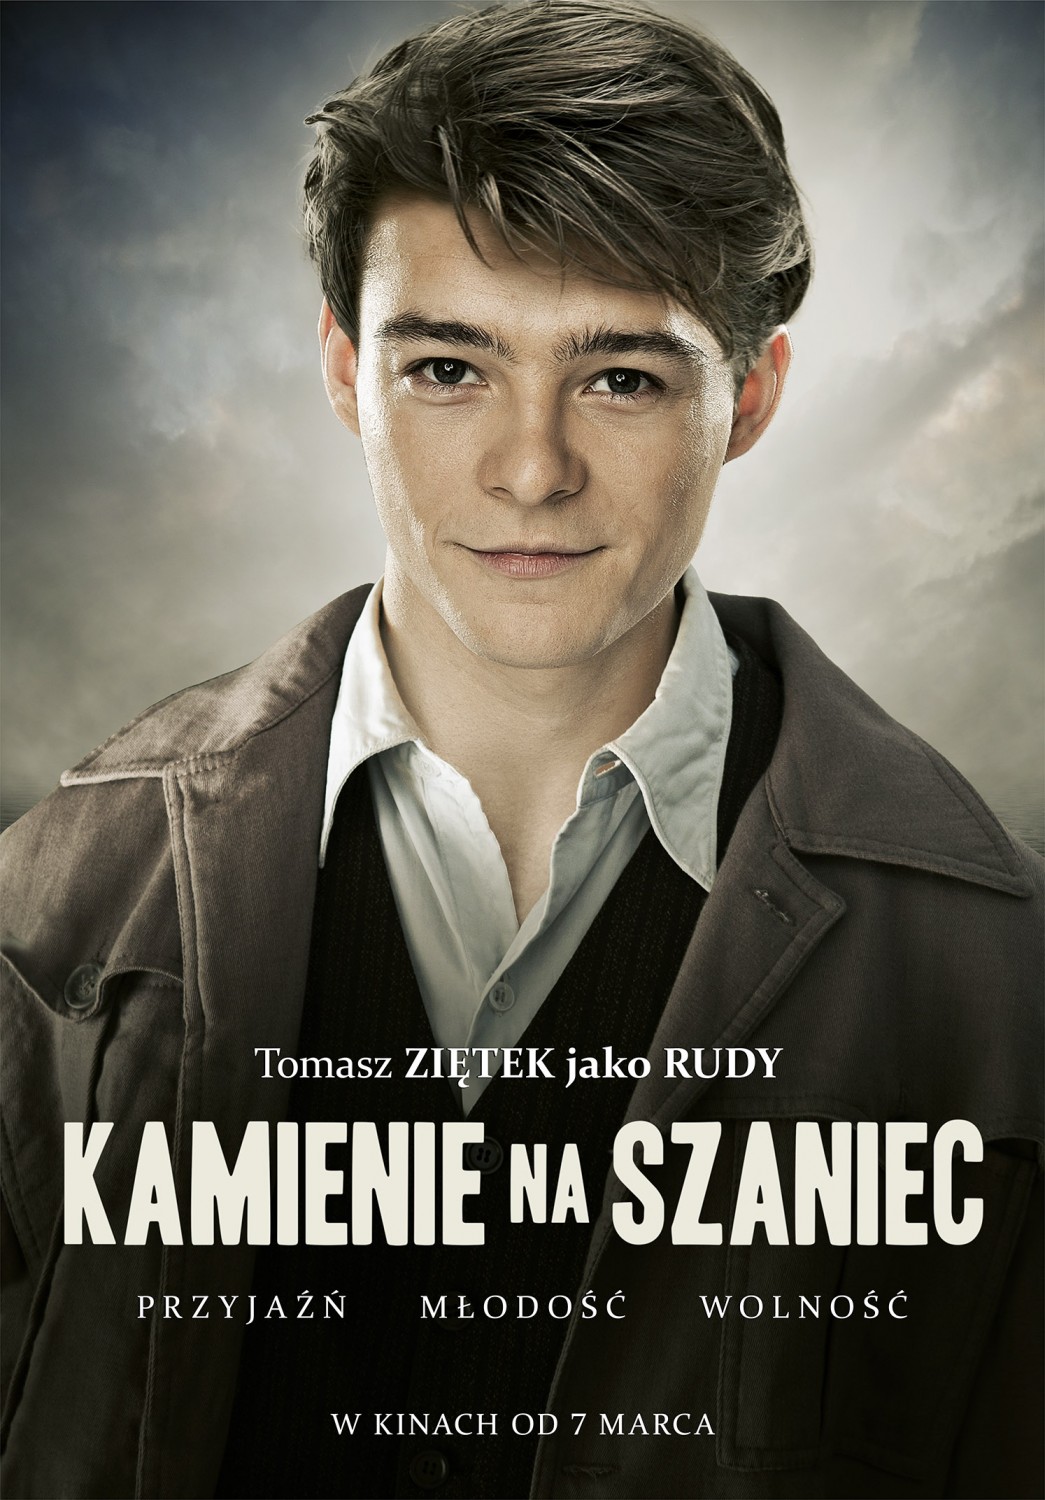 Extra Large Movie Poster Image for Kamienie na szaniec (#1 of 8)